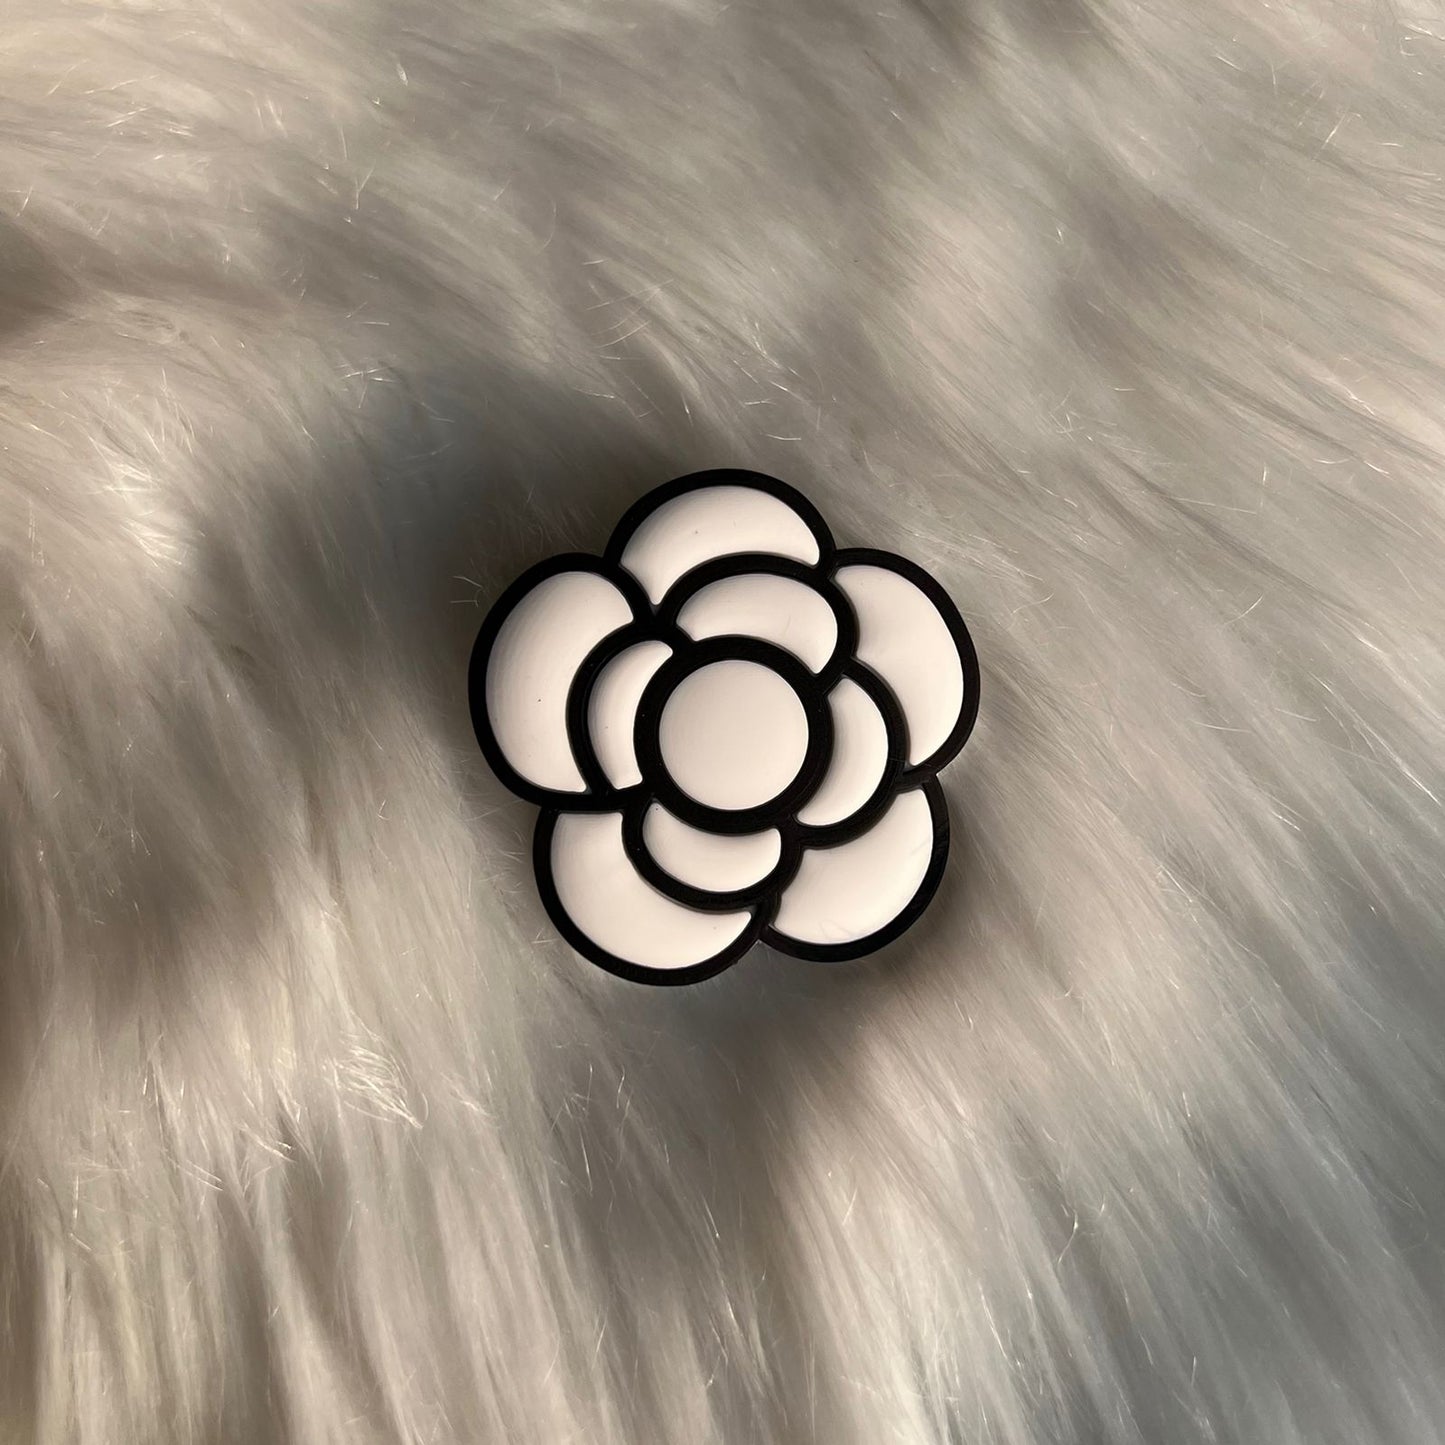 Grayscale flower